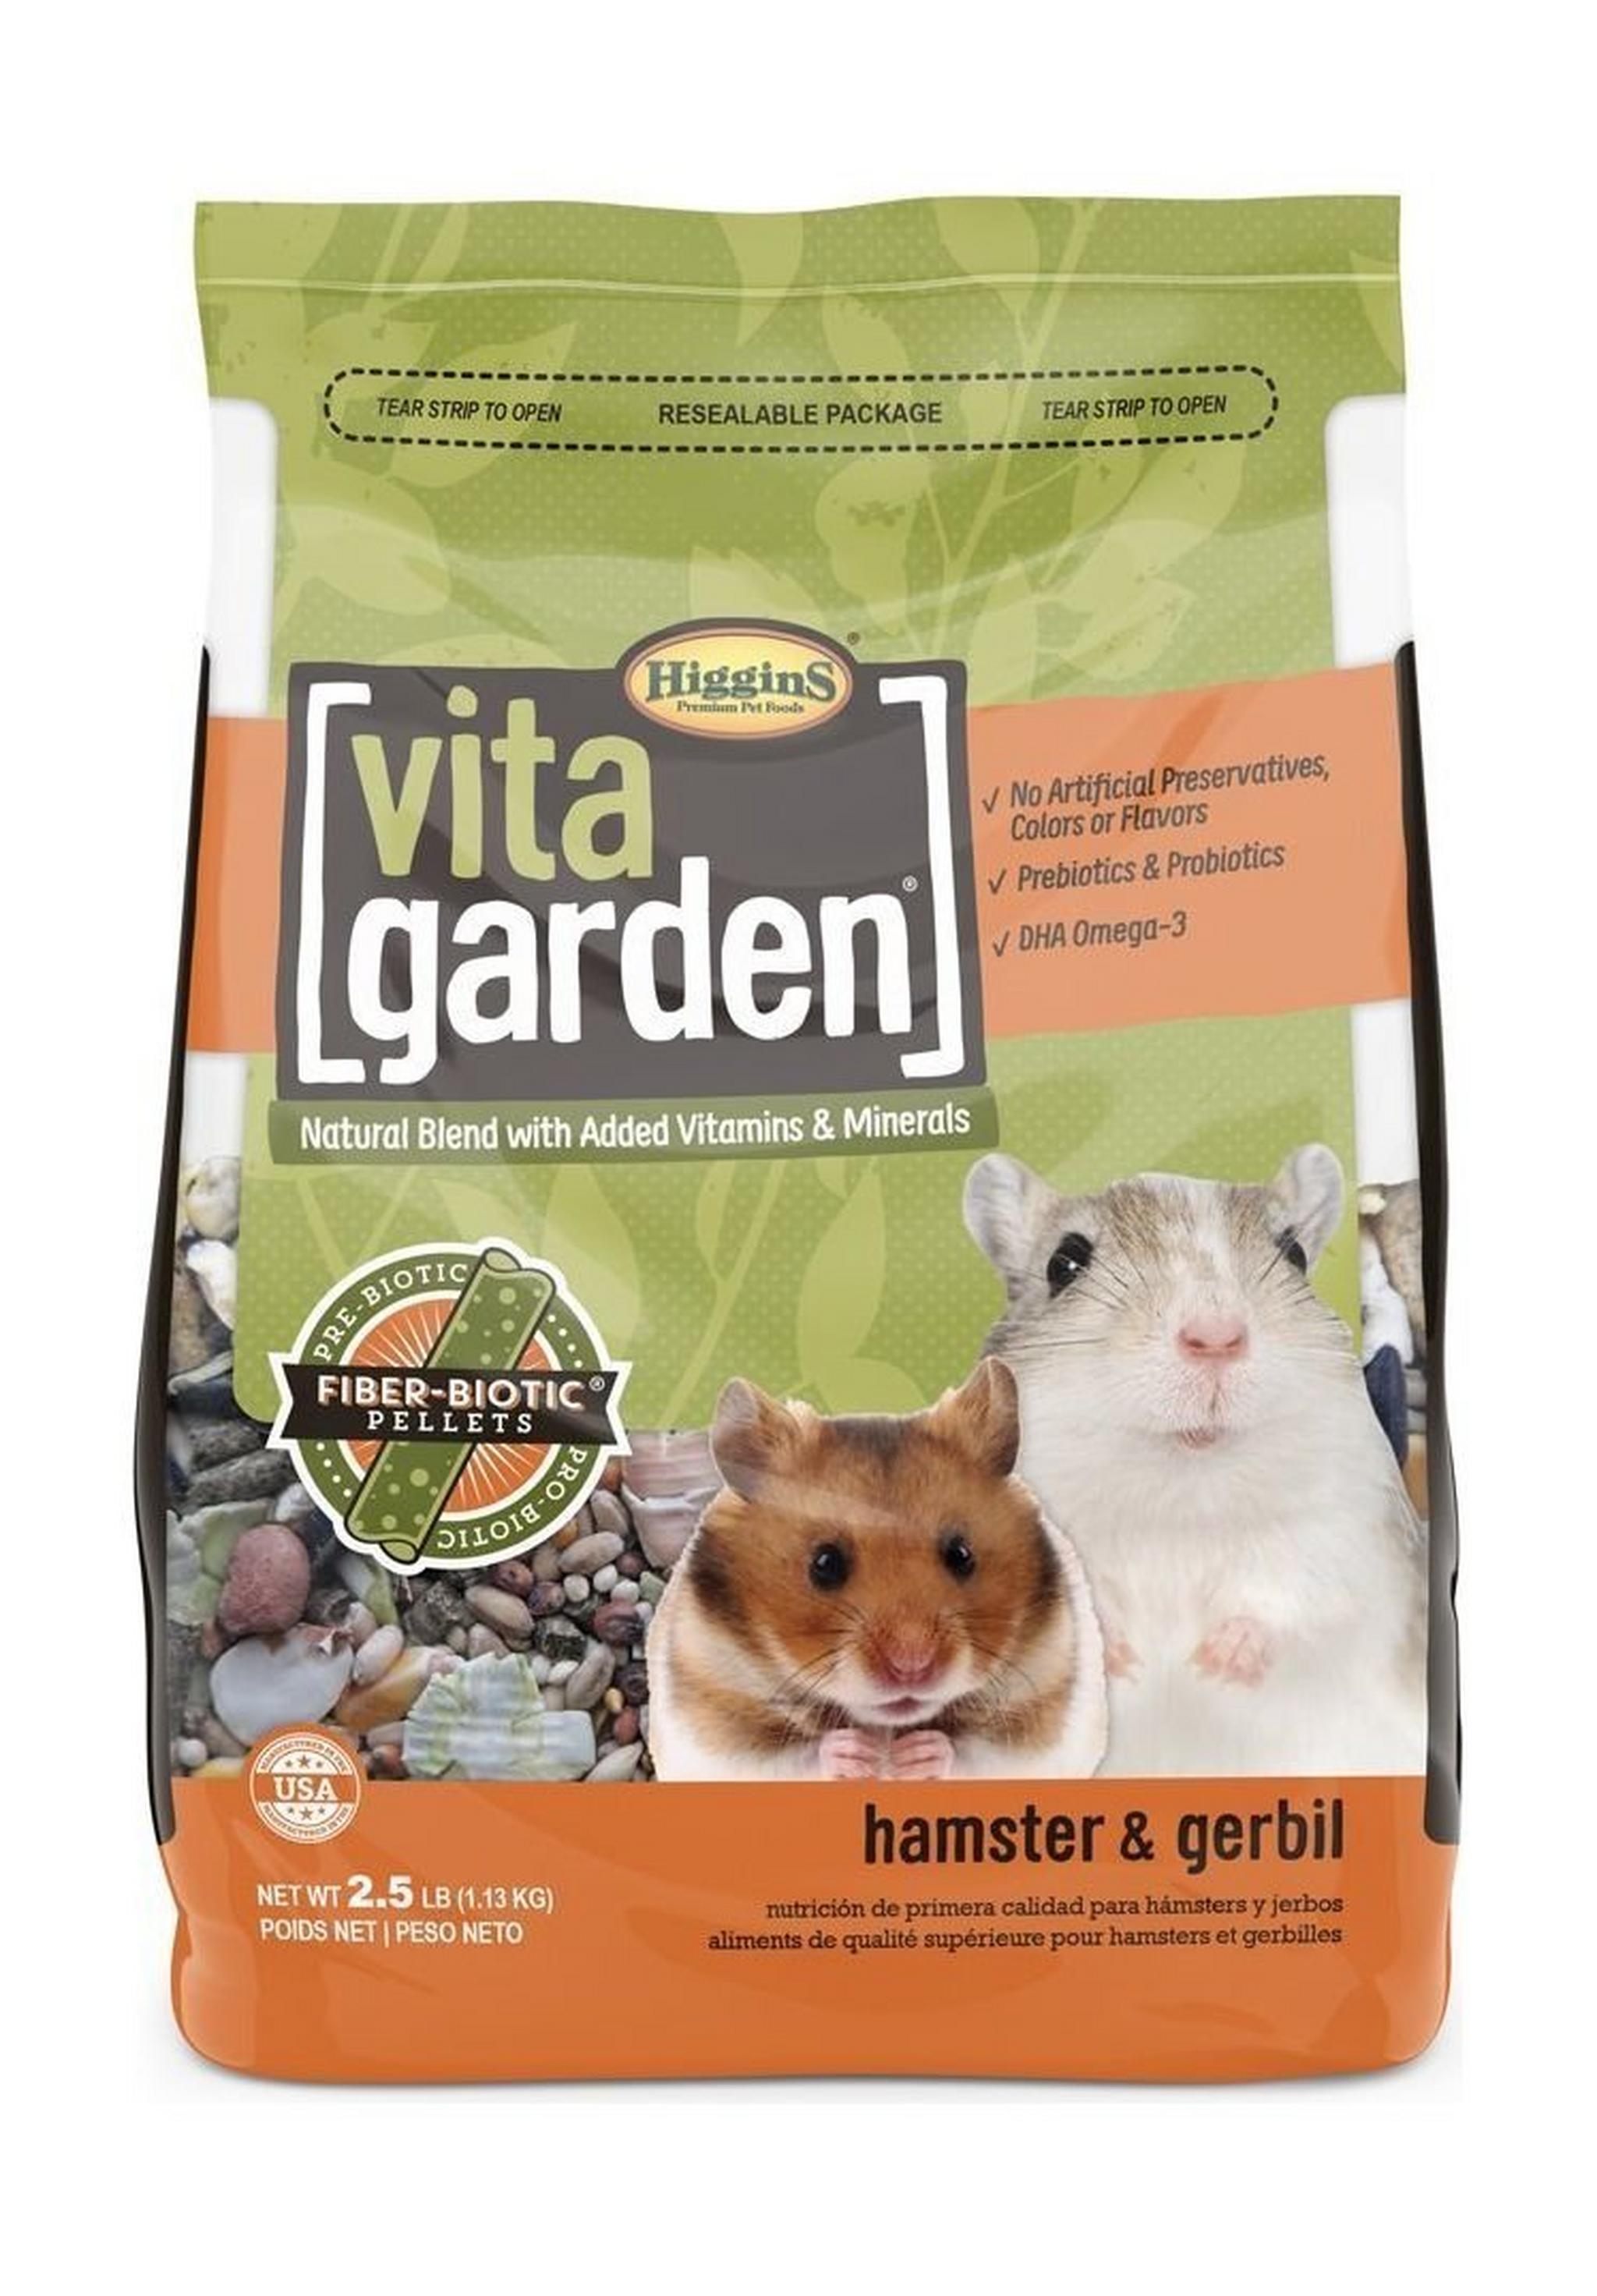 Higgins Vita Garden Hamster & Gerbil Food - 2.5 Lbs. – Large